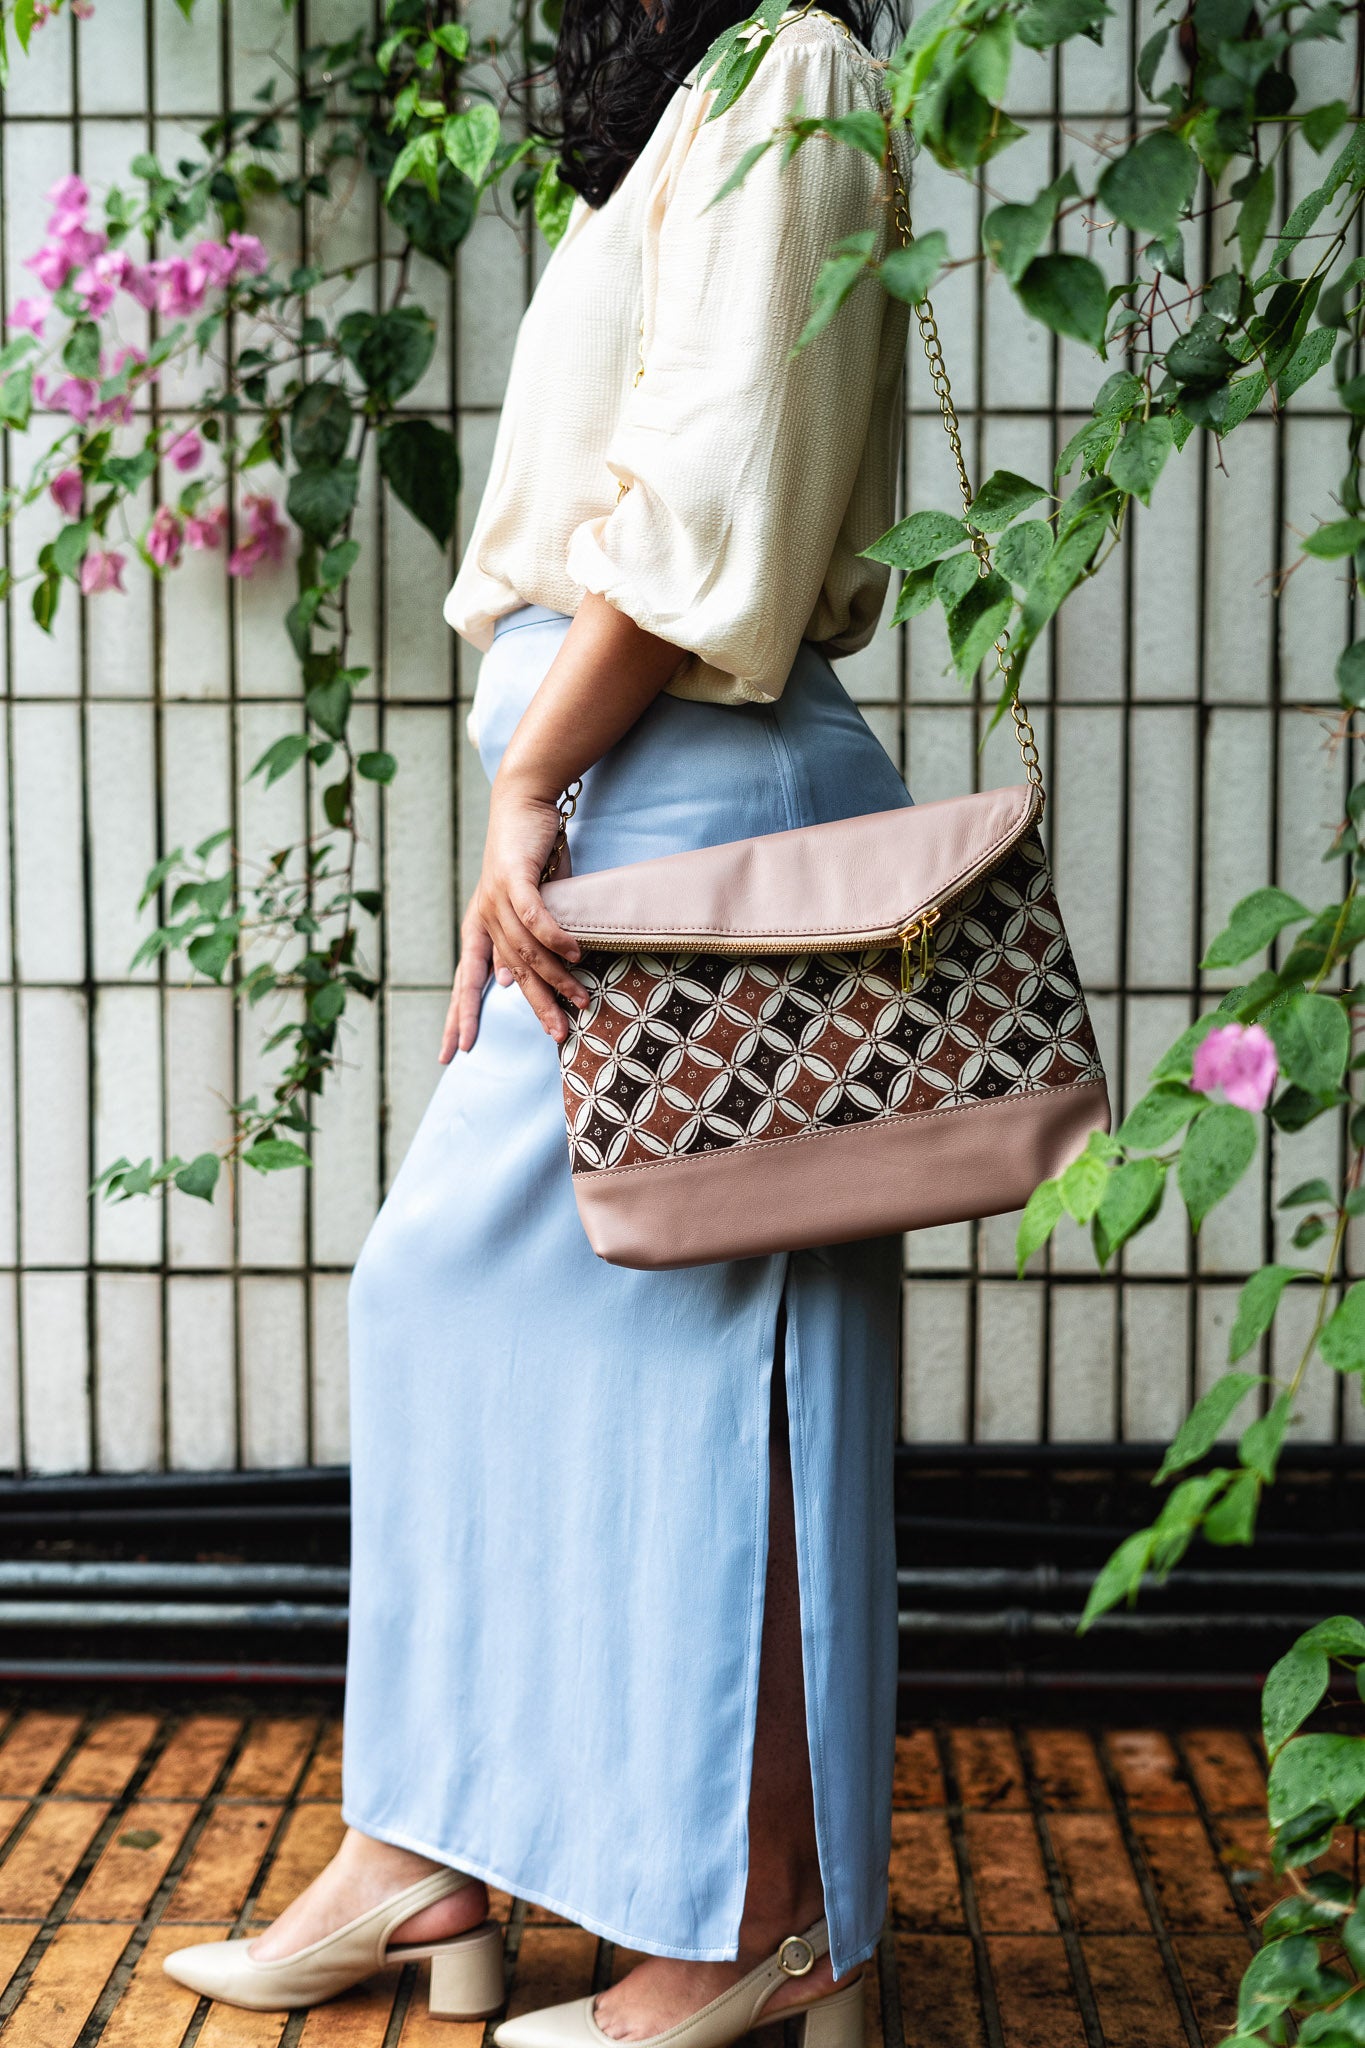 Batik Irama Classy Shoulder Bag from Singapore ethical designer Gypsied